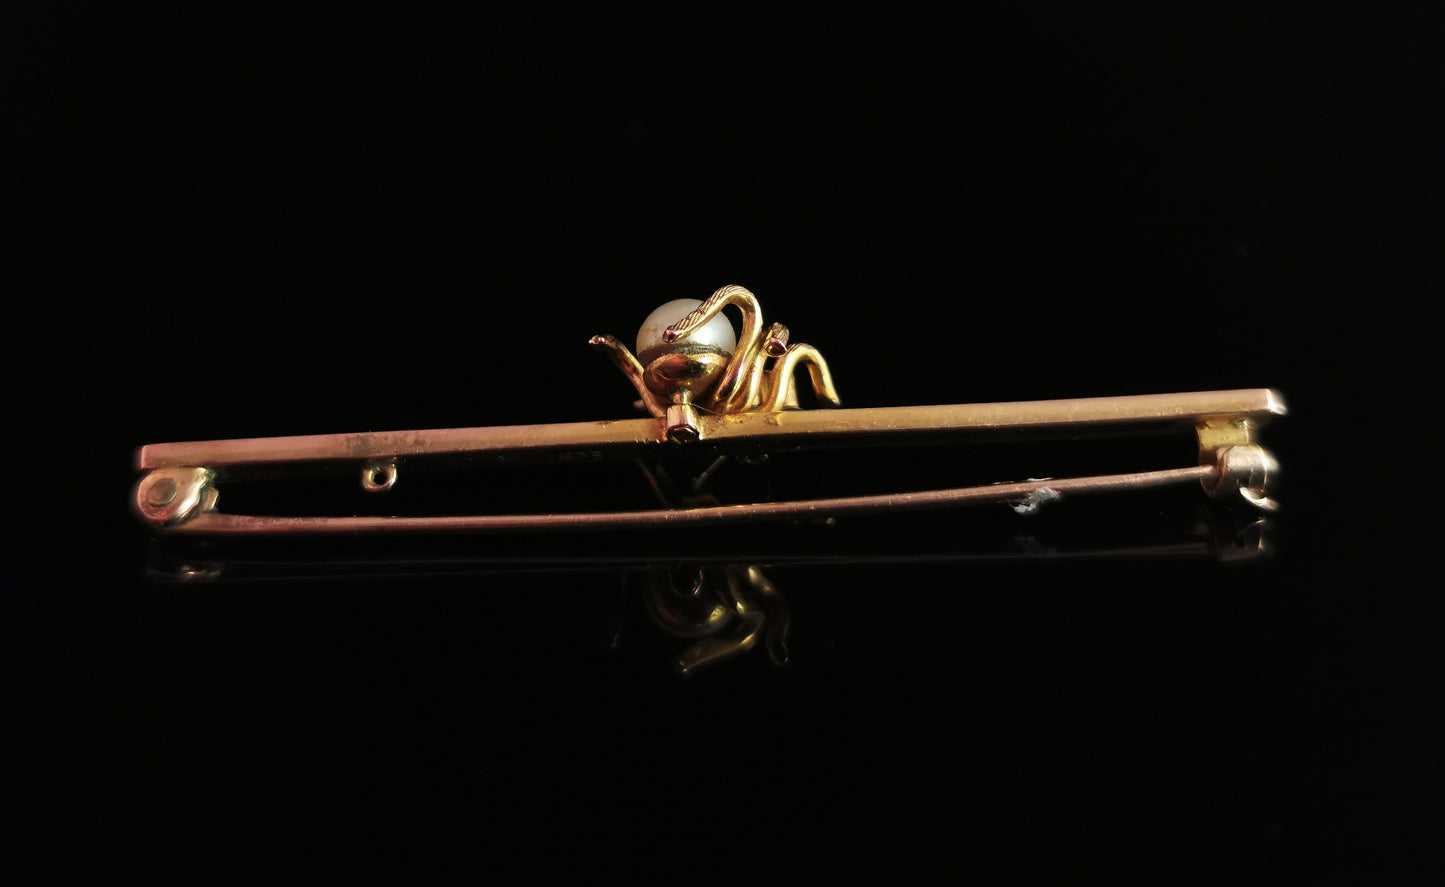 Antique 9ct gold Spider brooch, Demantoid garnet and pearl, Edwardian